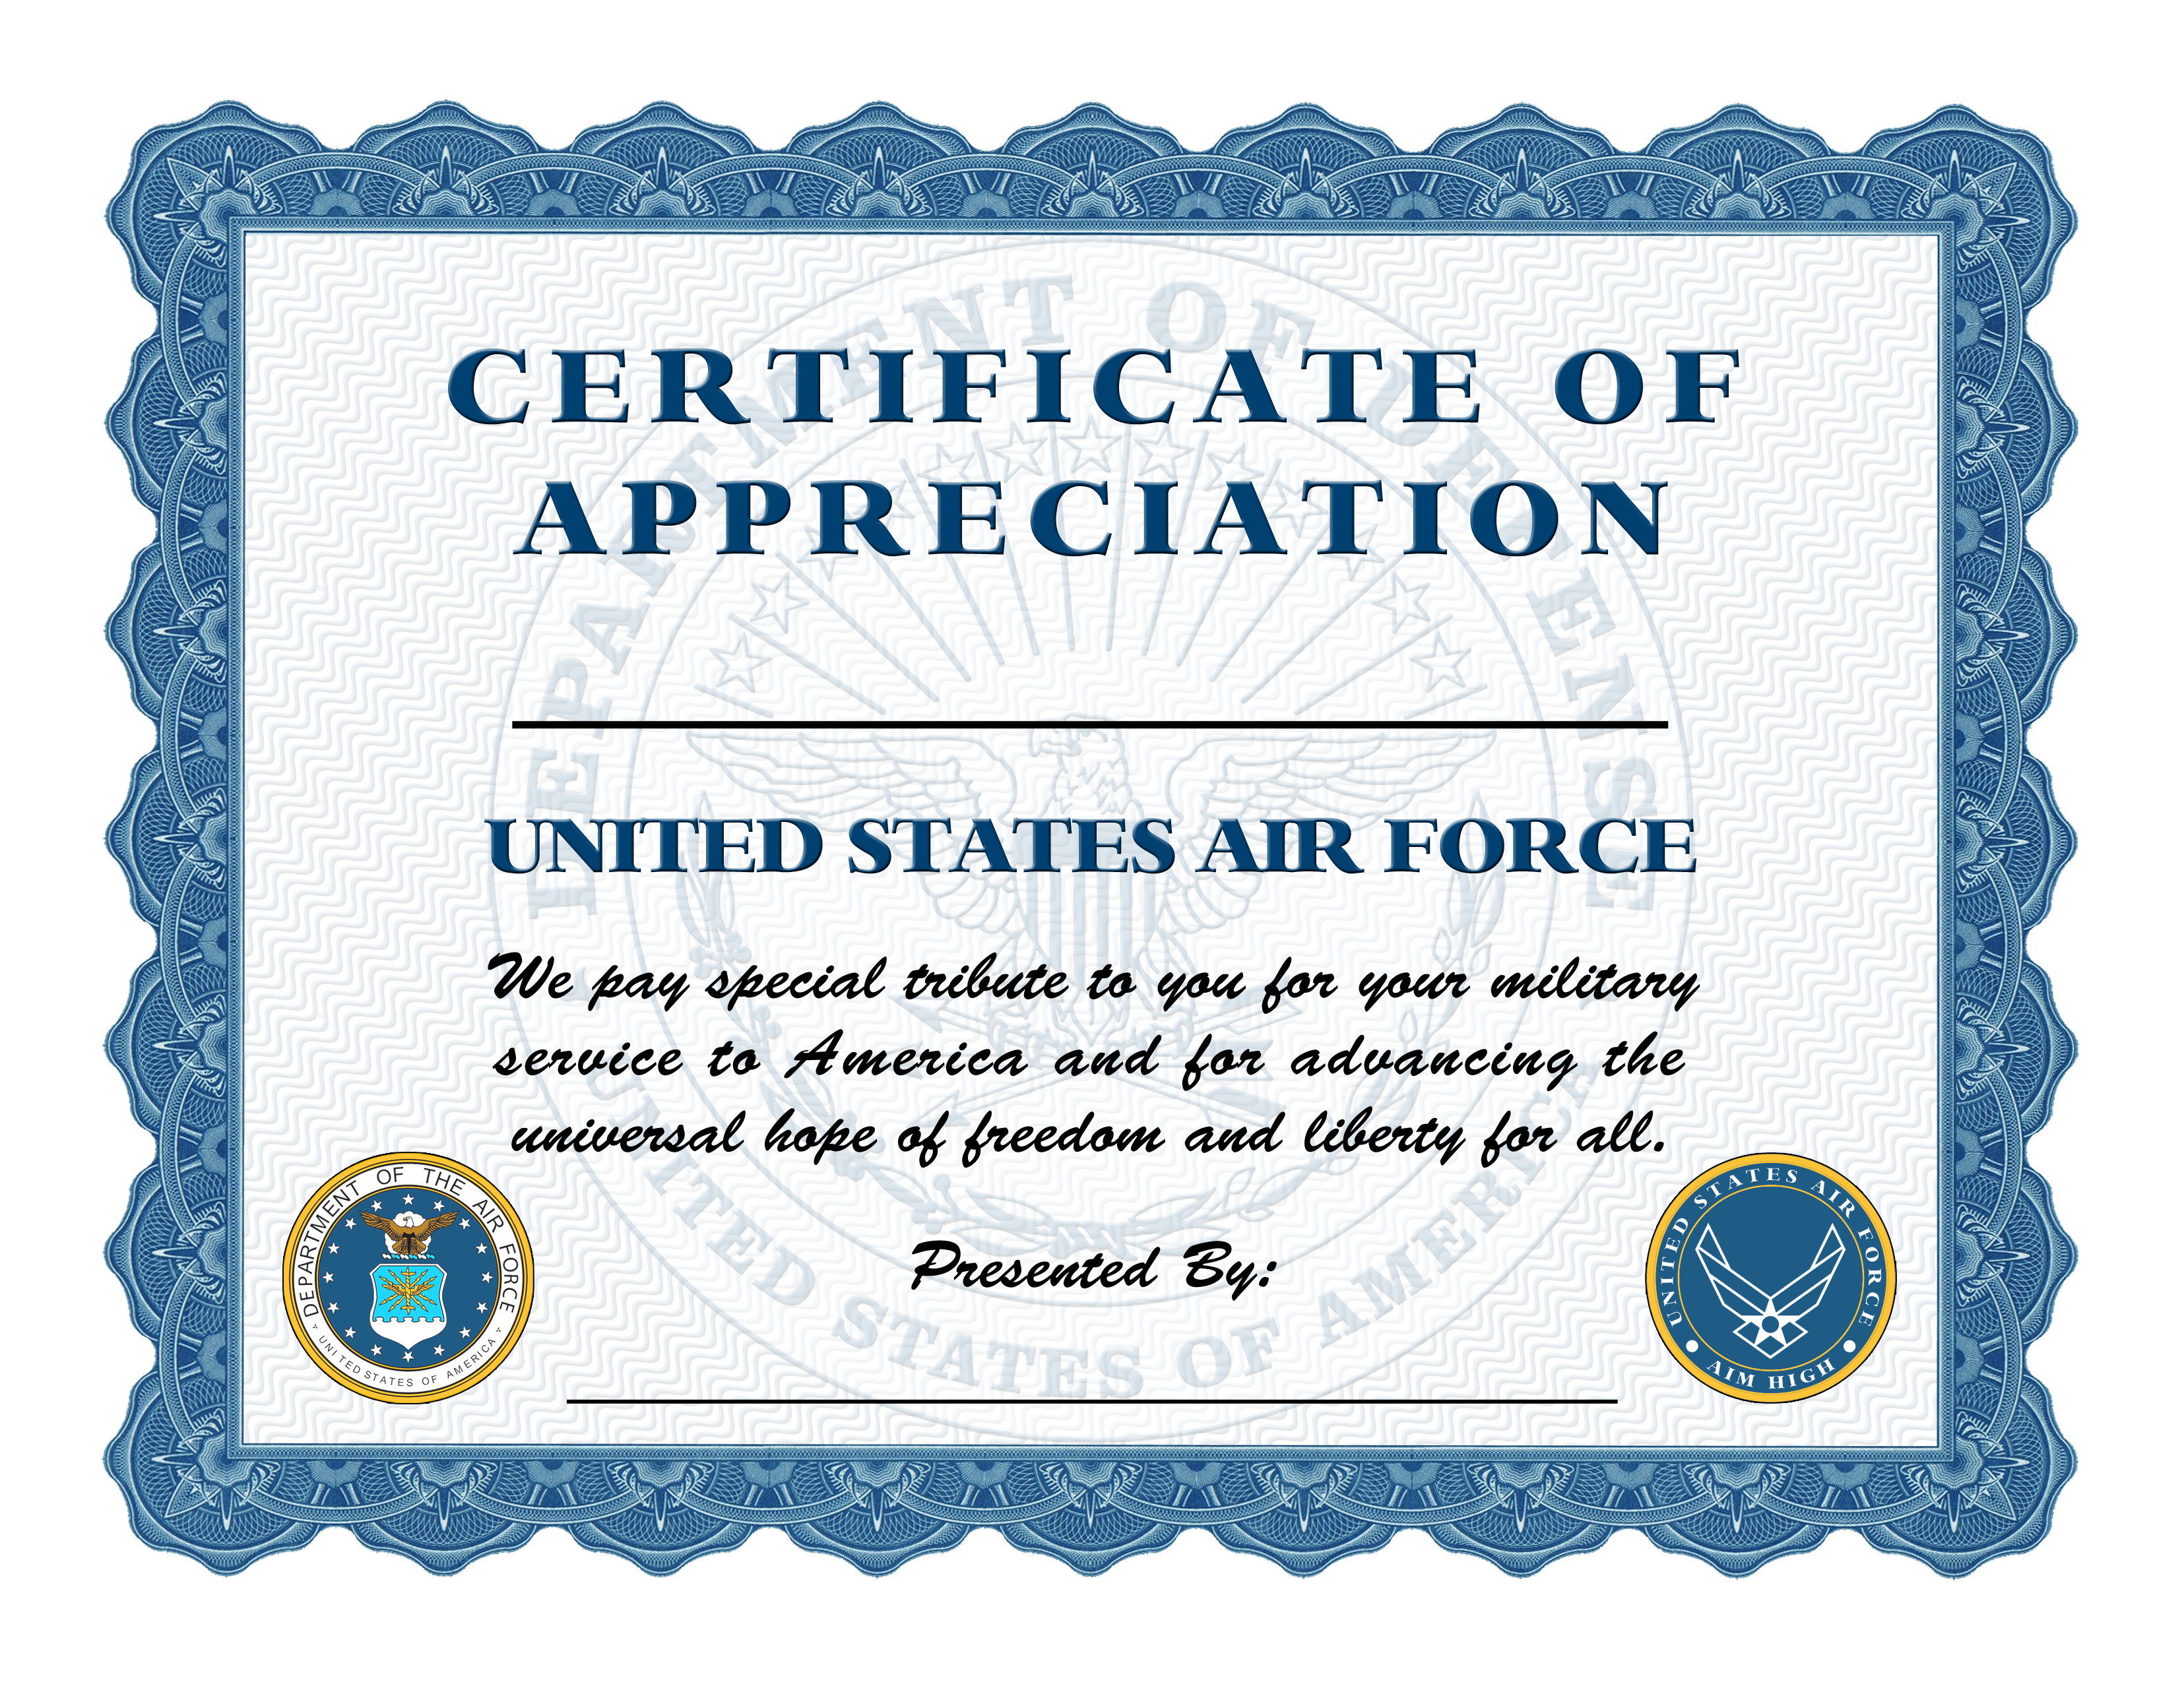 Air Force Veteran Appreciation Certificate by RobertLaRose on DeviantArt